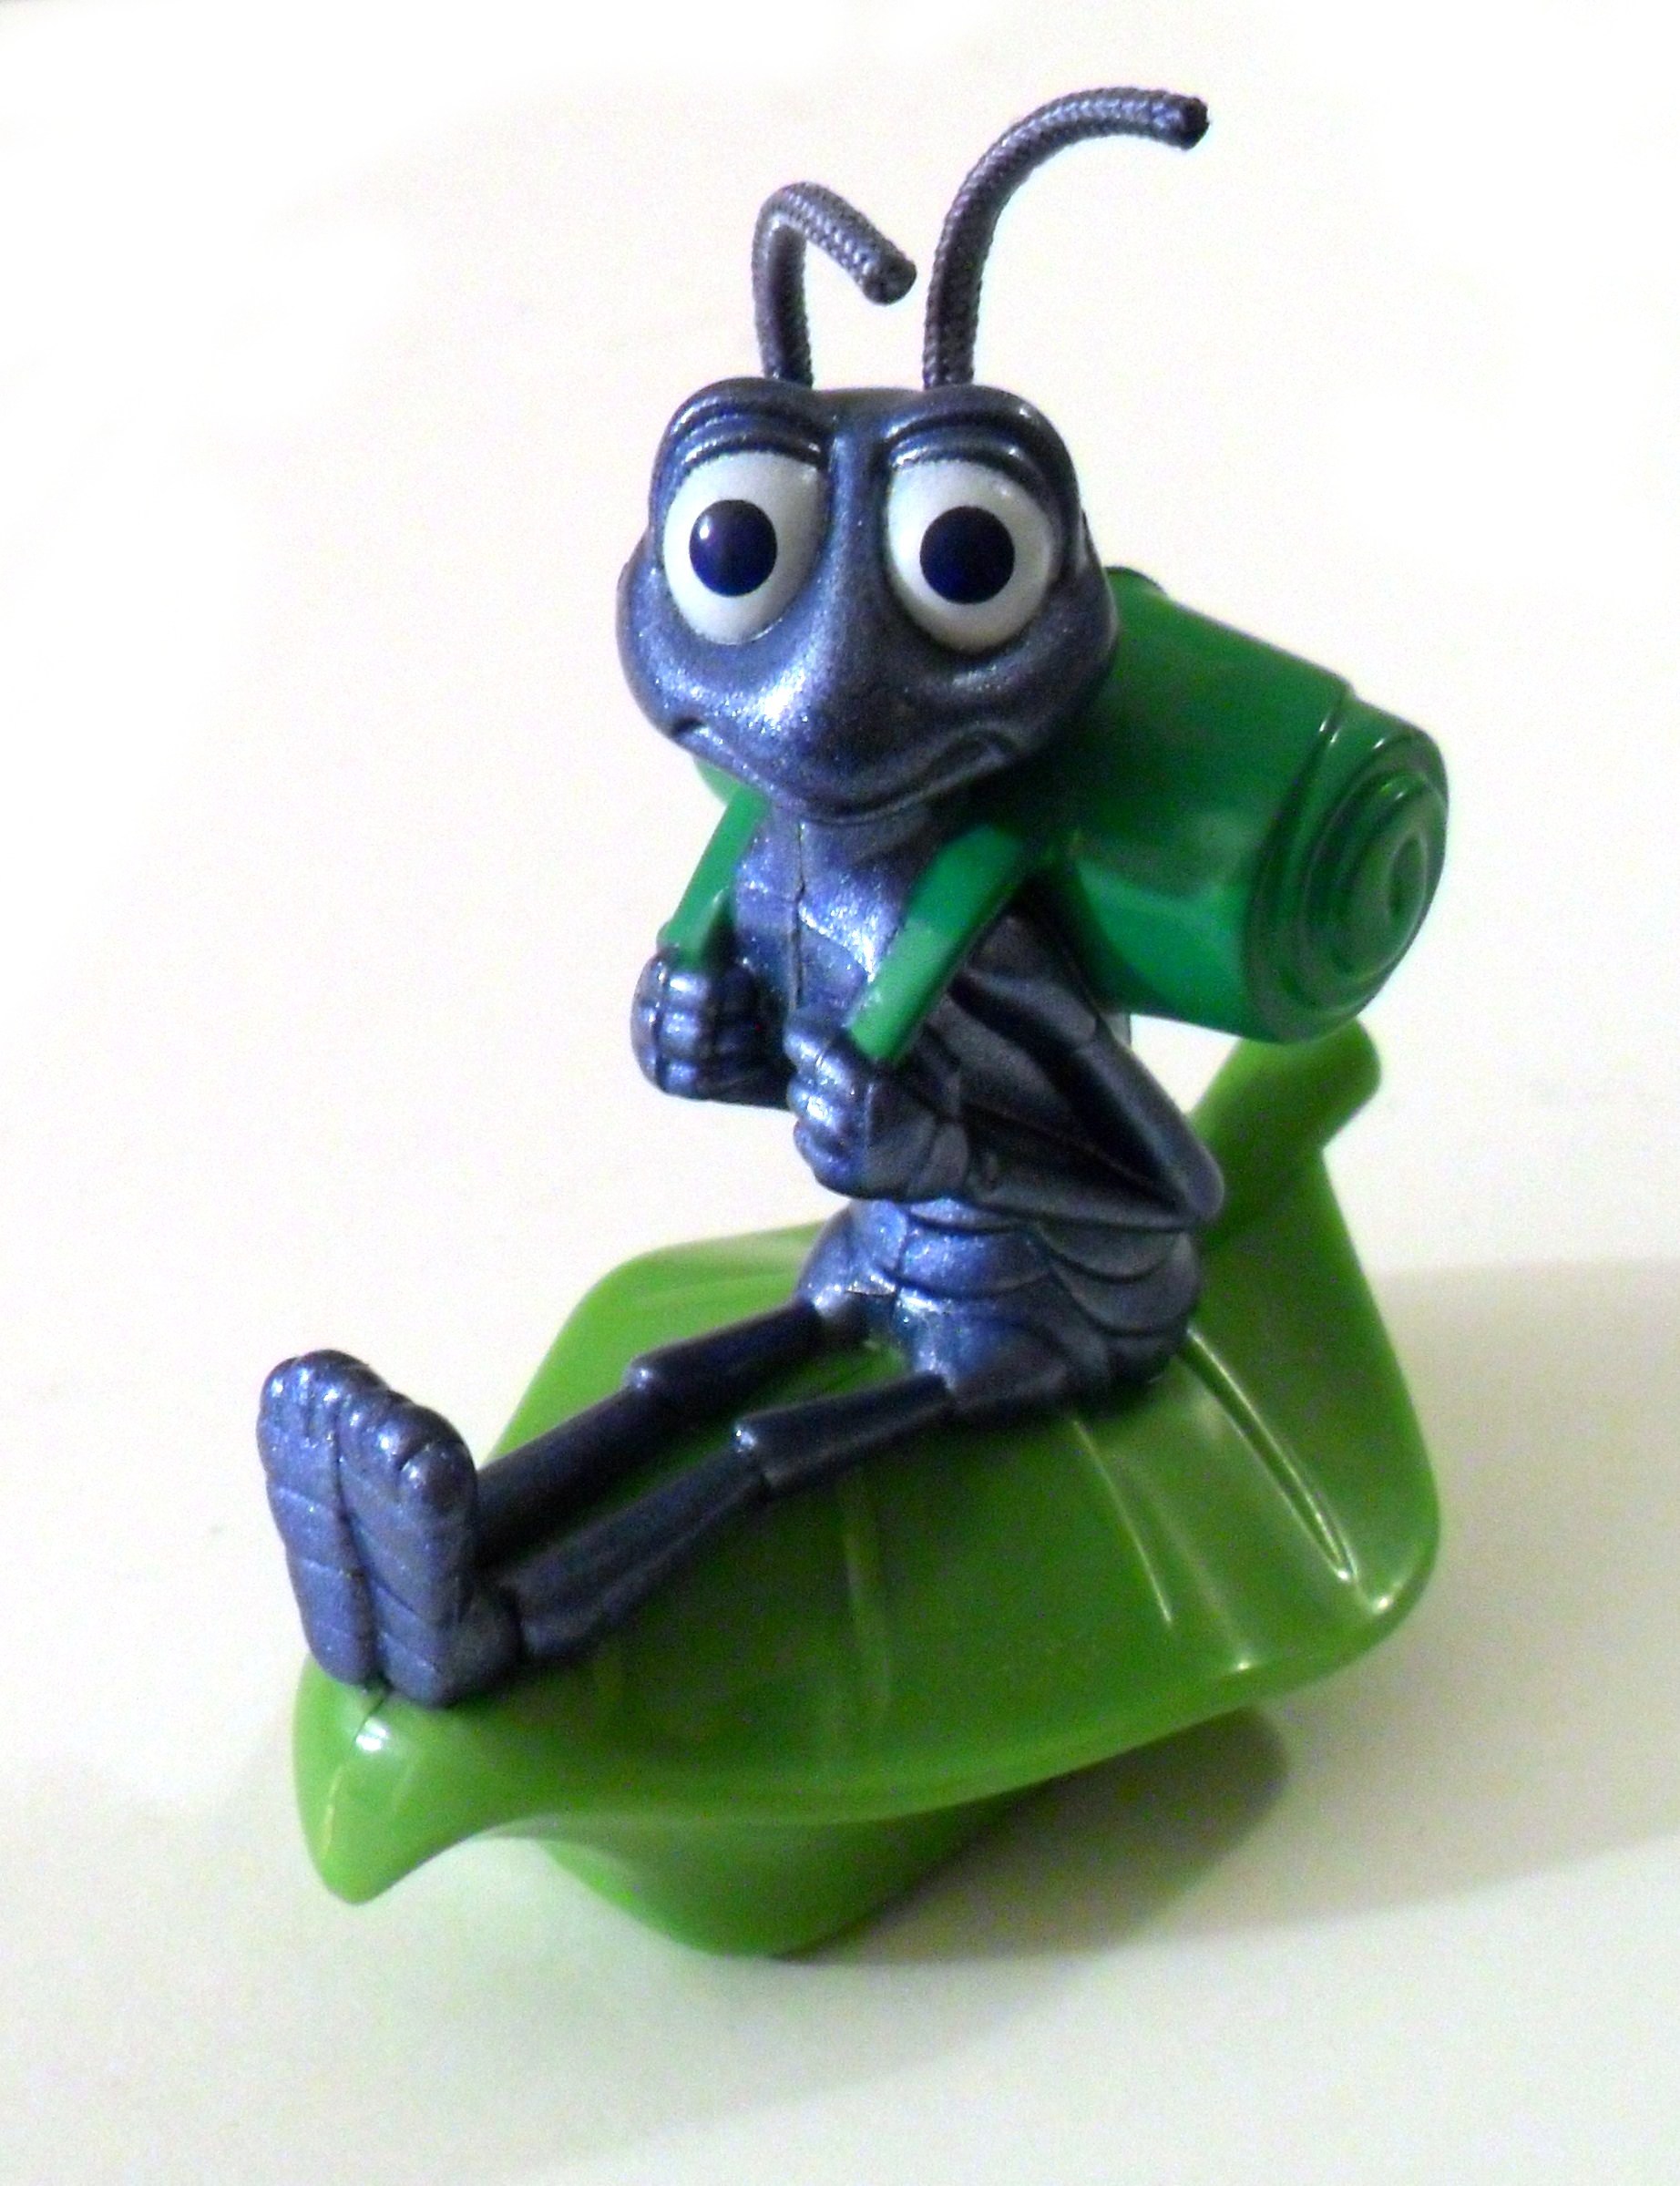 Details about   1998 McDonalds Disney Pixar A Bugs Life Toy #6 Heimlich Caterpillar New & Sealed 